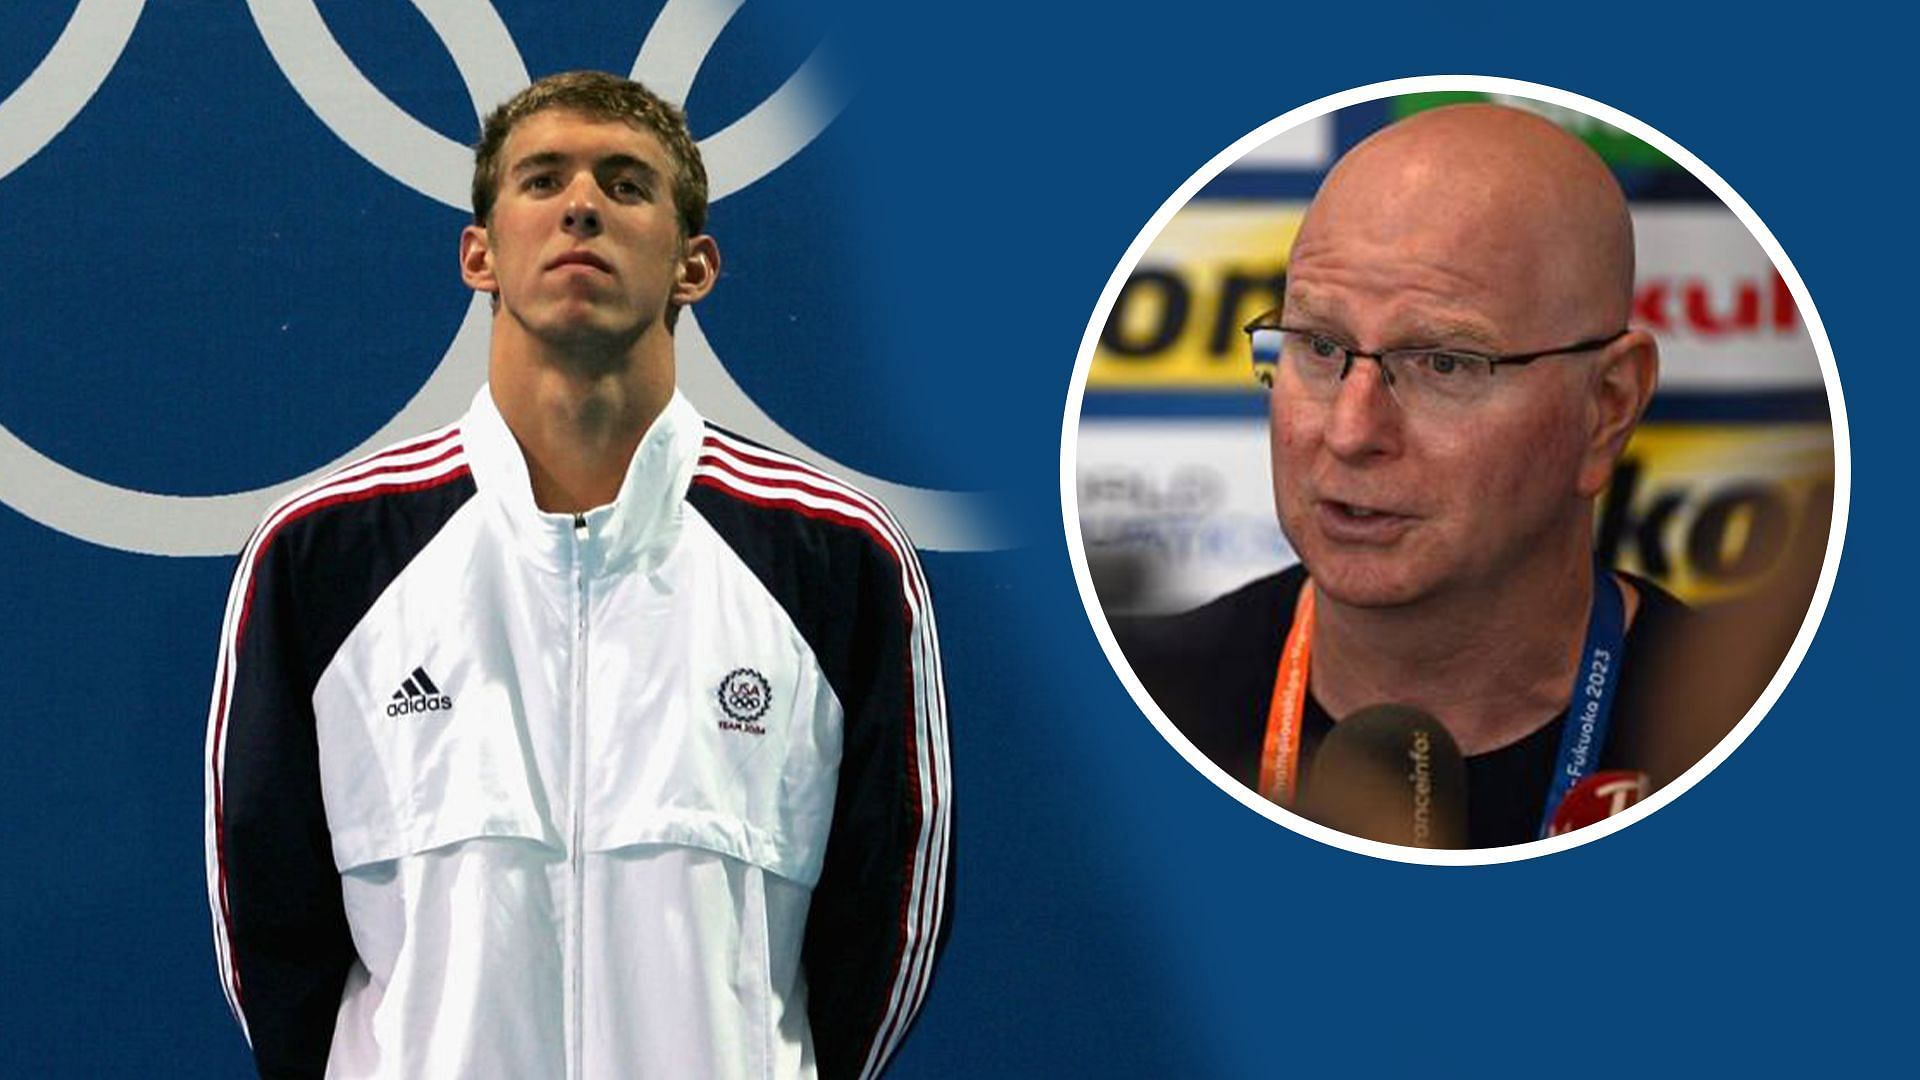 Michael Phelps highlighted his training days under coach Bob Bowman.